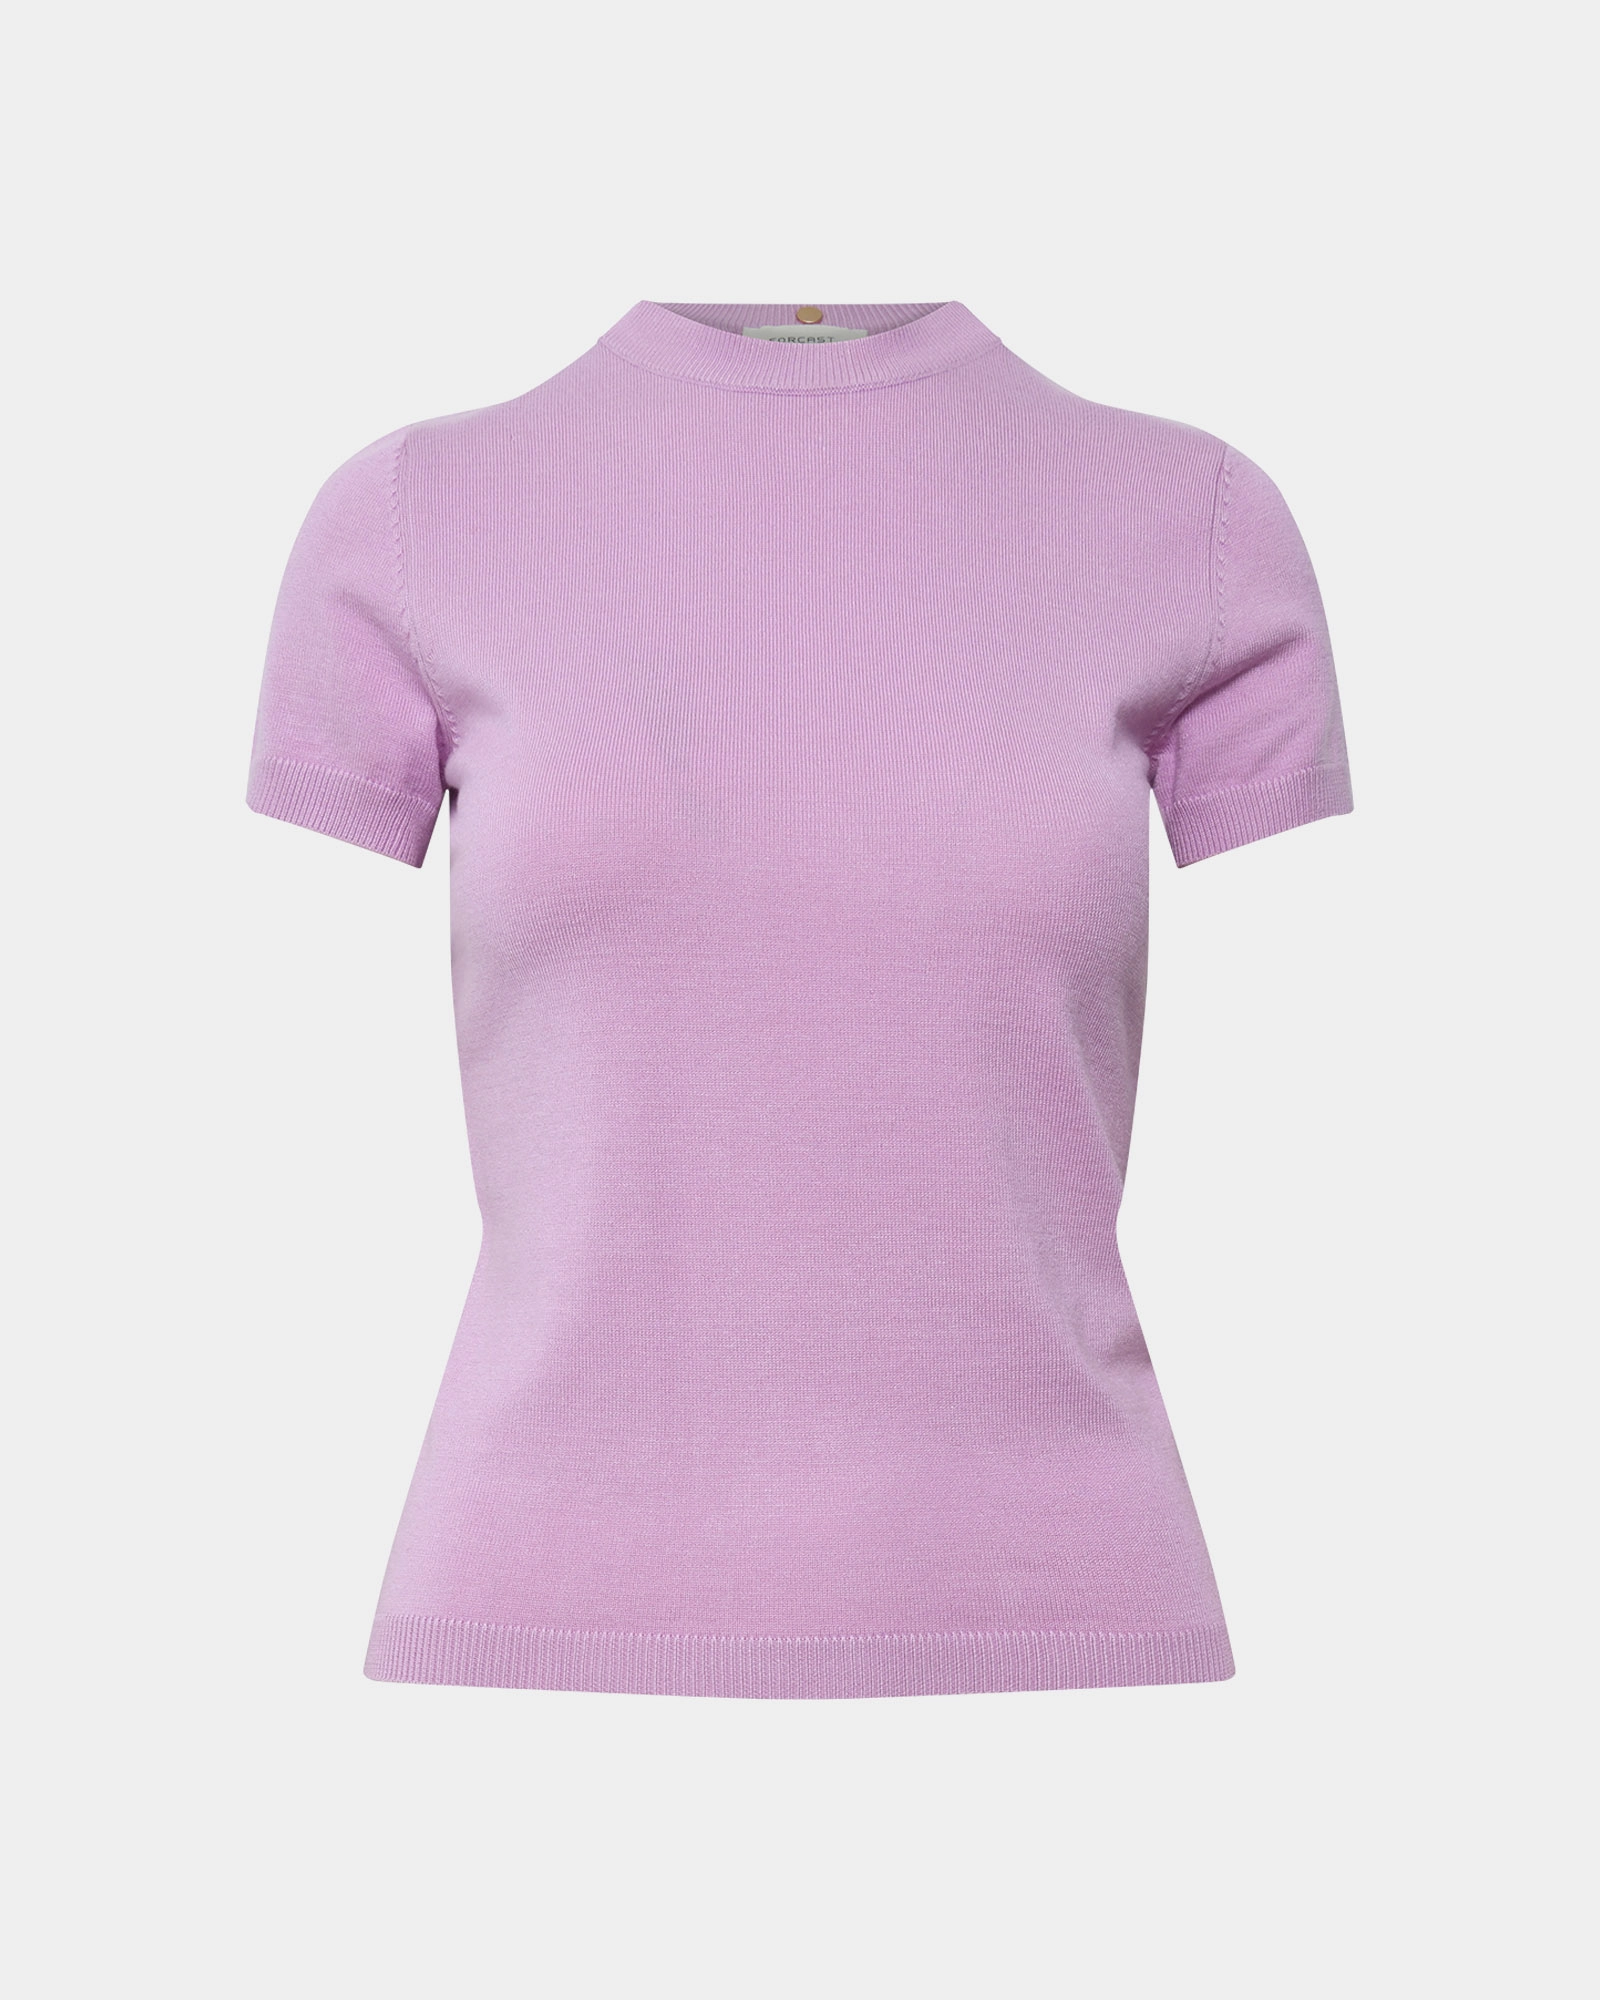 Catherine Short Sleeve Knit, Mauve Pink